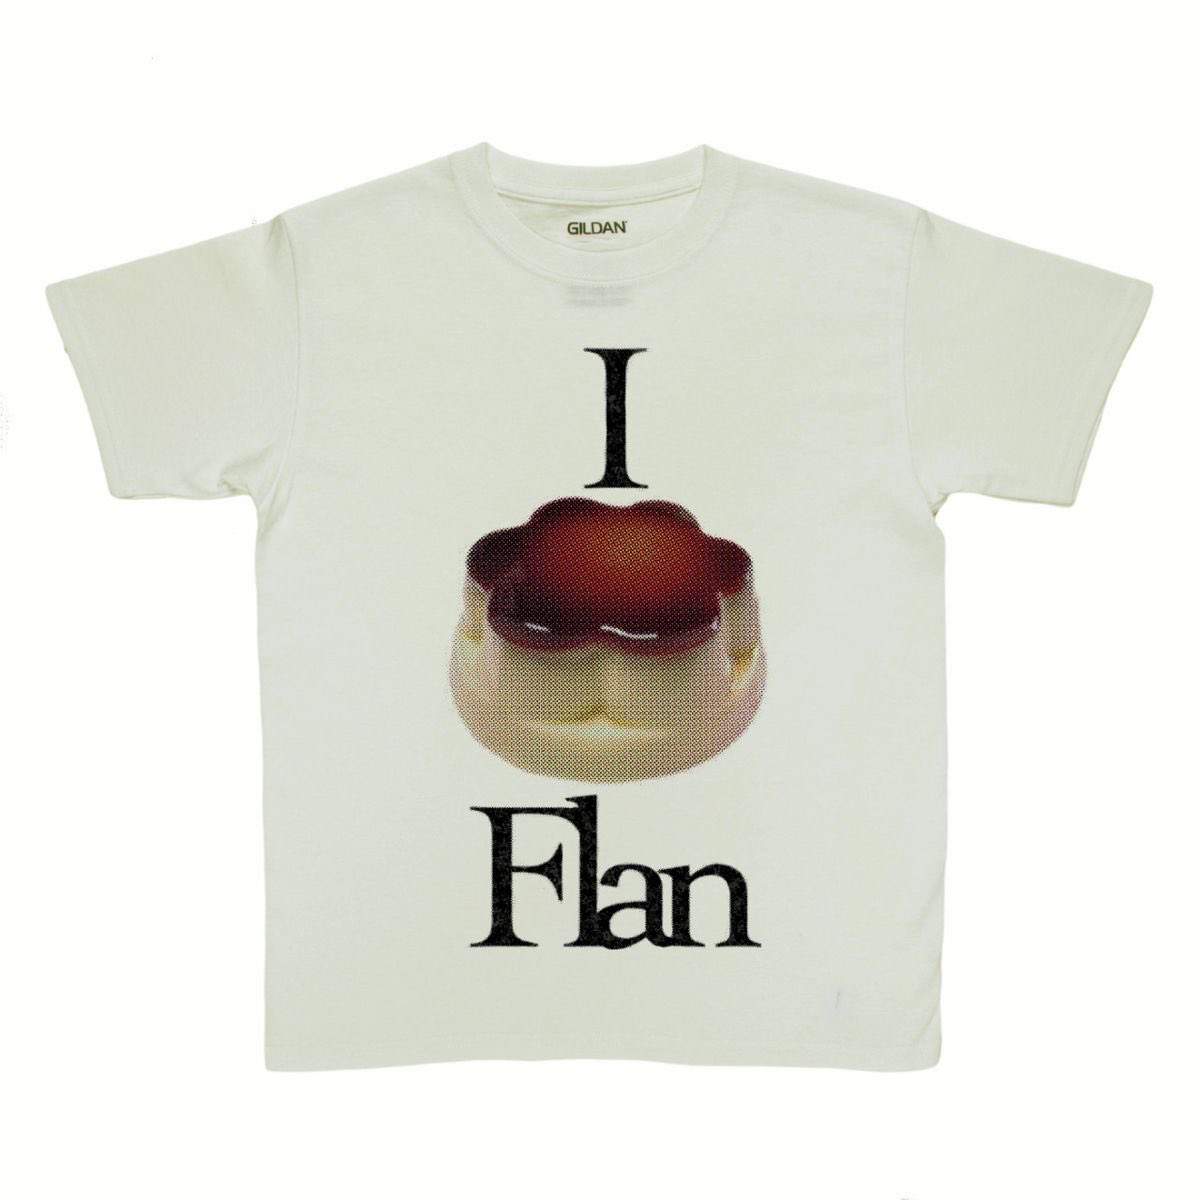 flan t-shirt.png